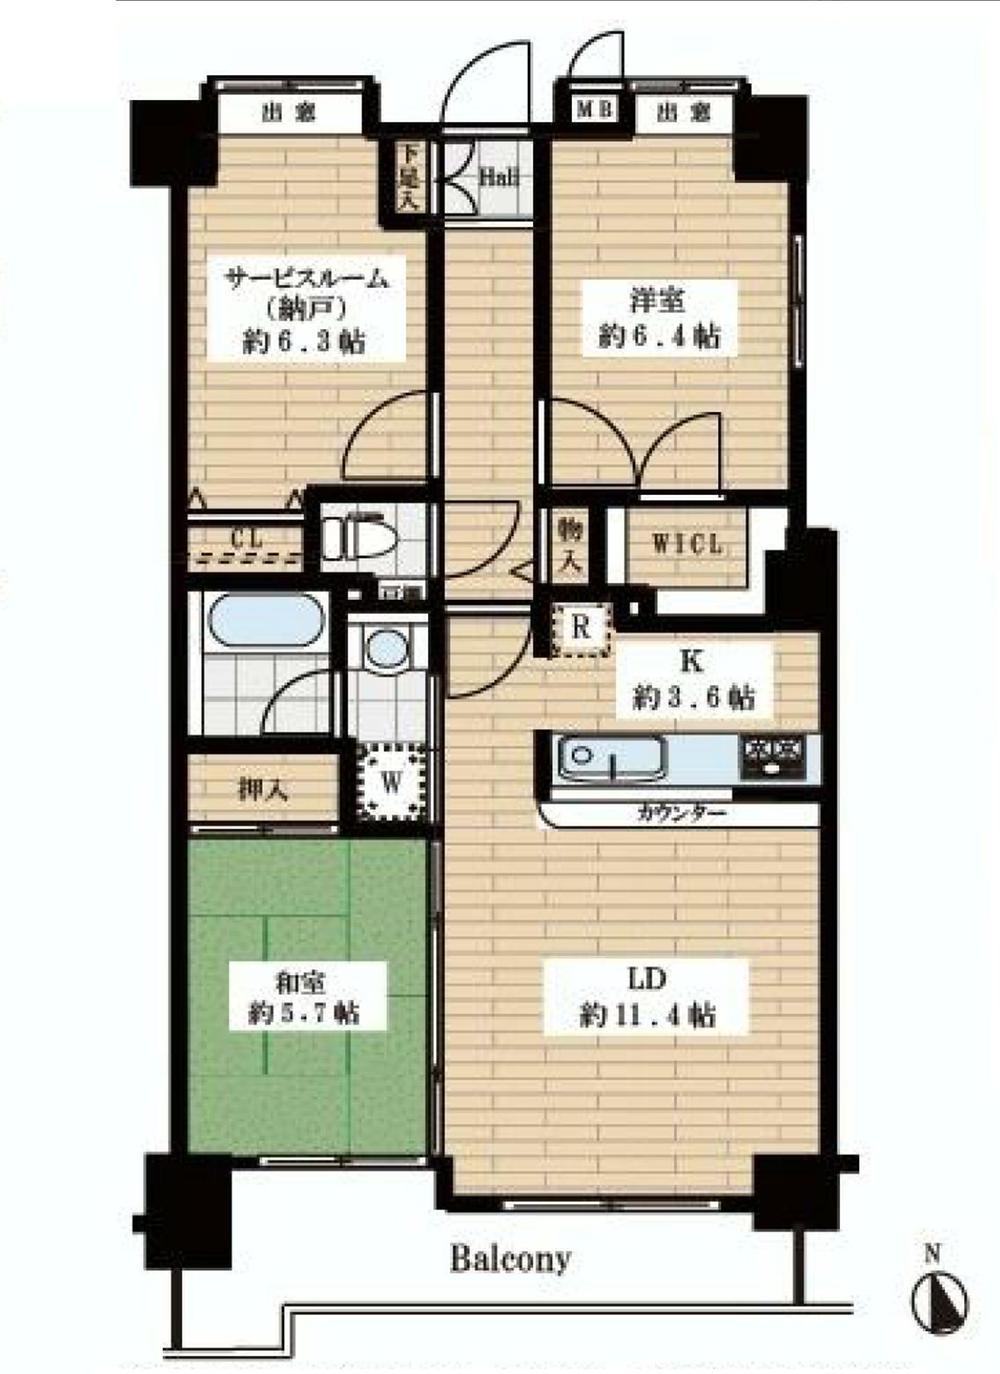 Floor plan. 2LDK + S (storeroom), Price 38,700,000 yen, Occupied area 72.31 sq m , Balcony area 8.63 sq m